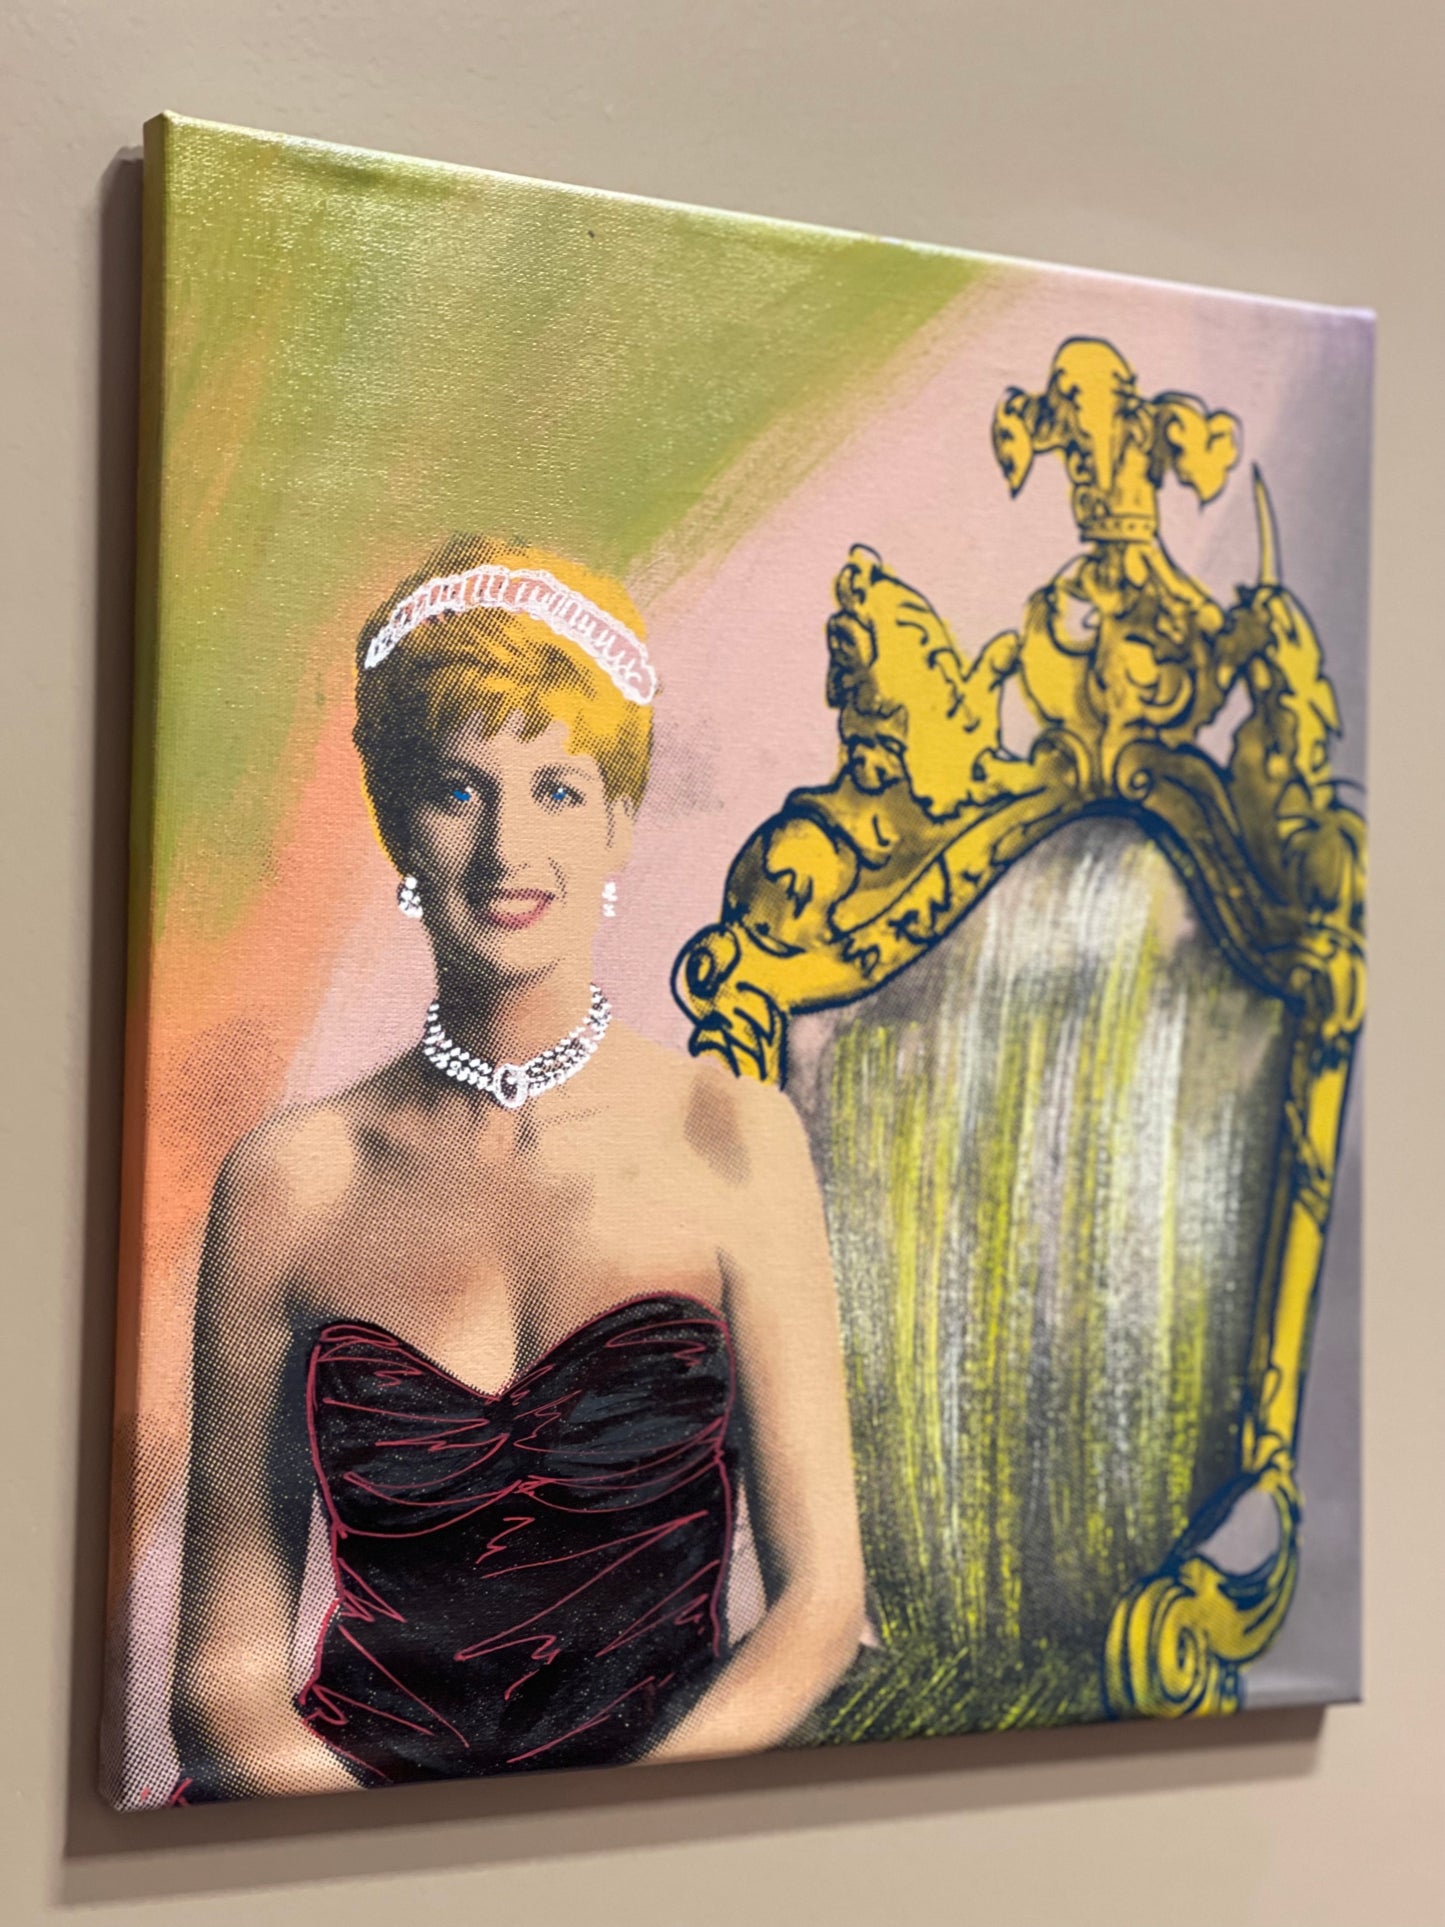 Original Signed Steve Kaufman Multi Media on Canvas Painting of Princess Diana w/ Crown #32/50